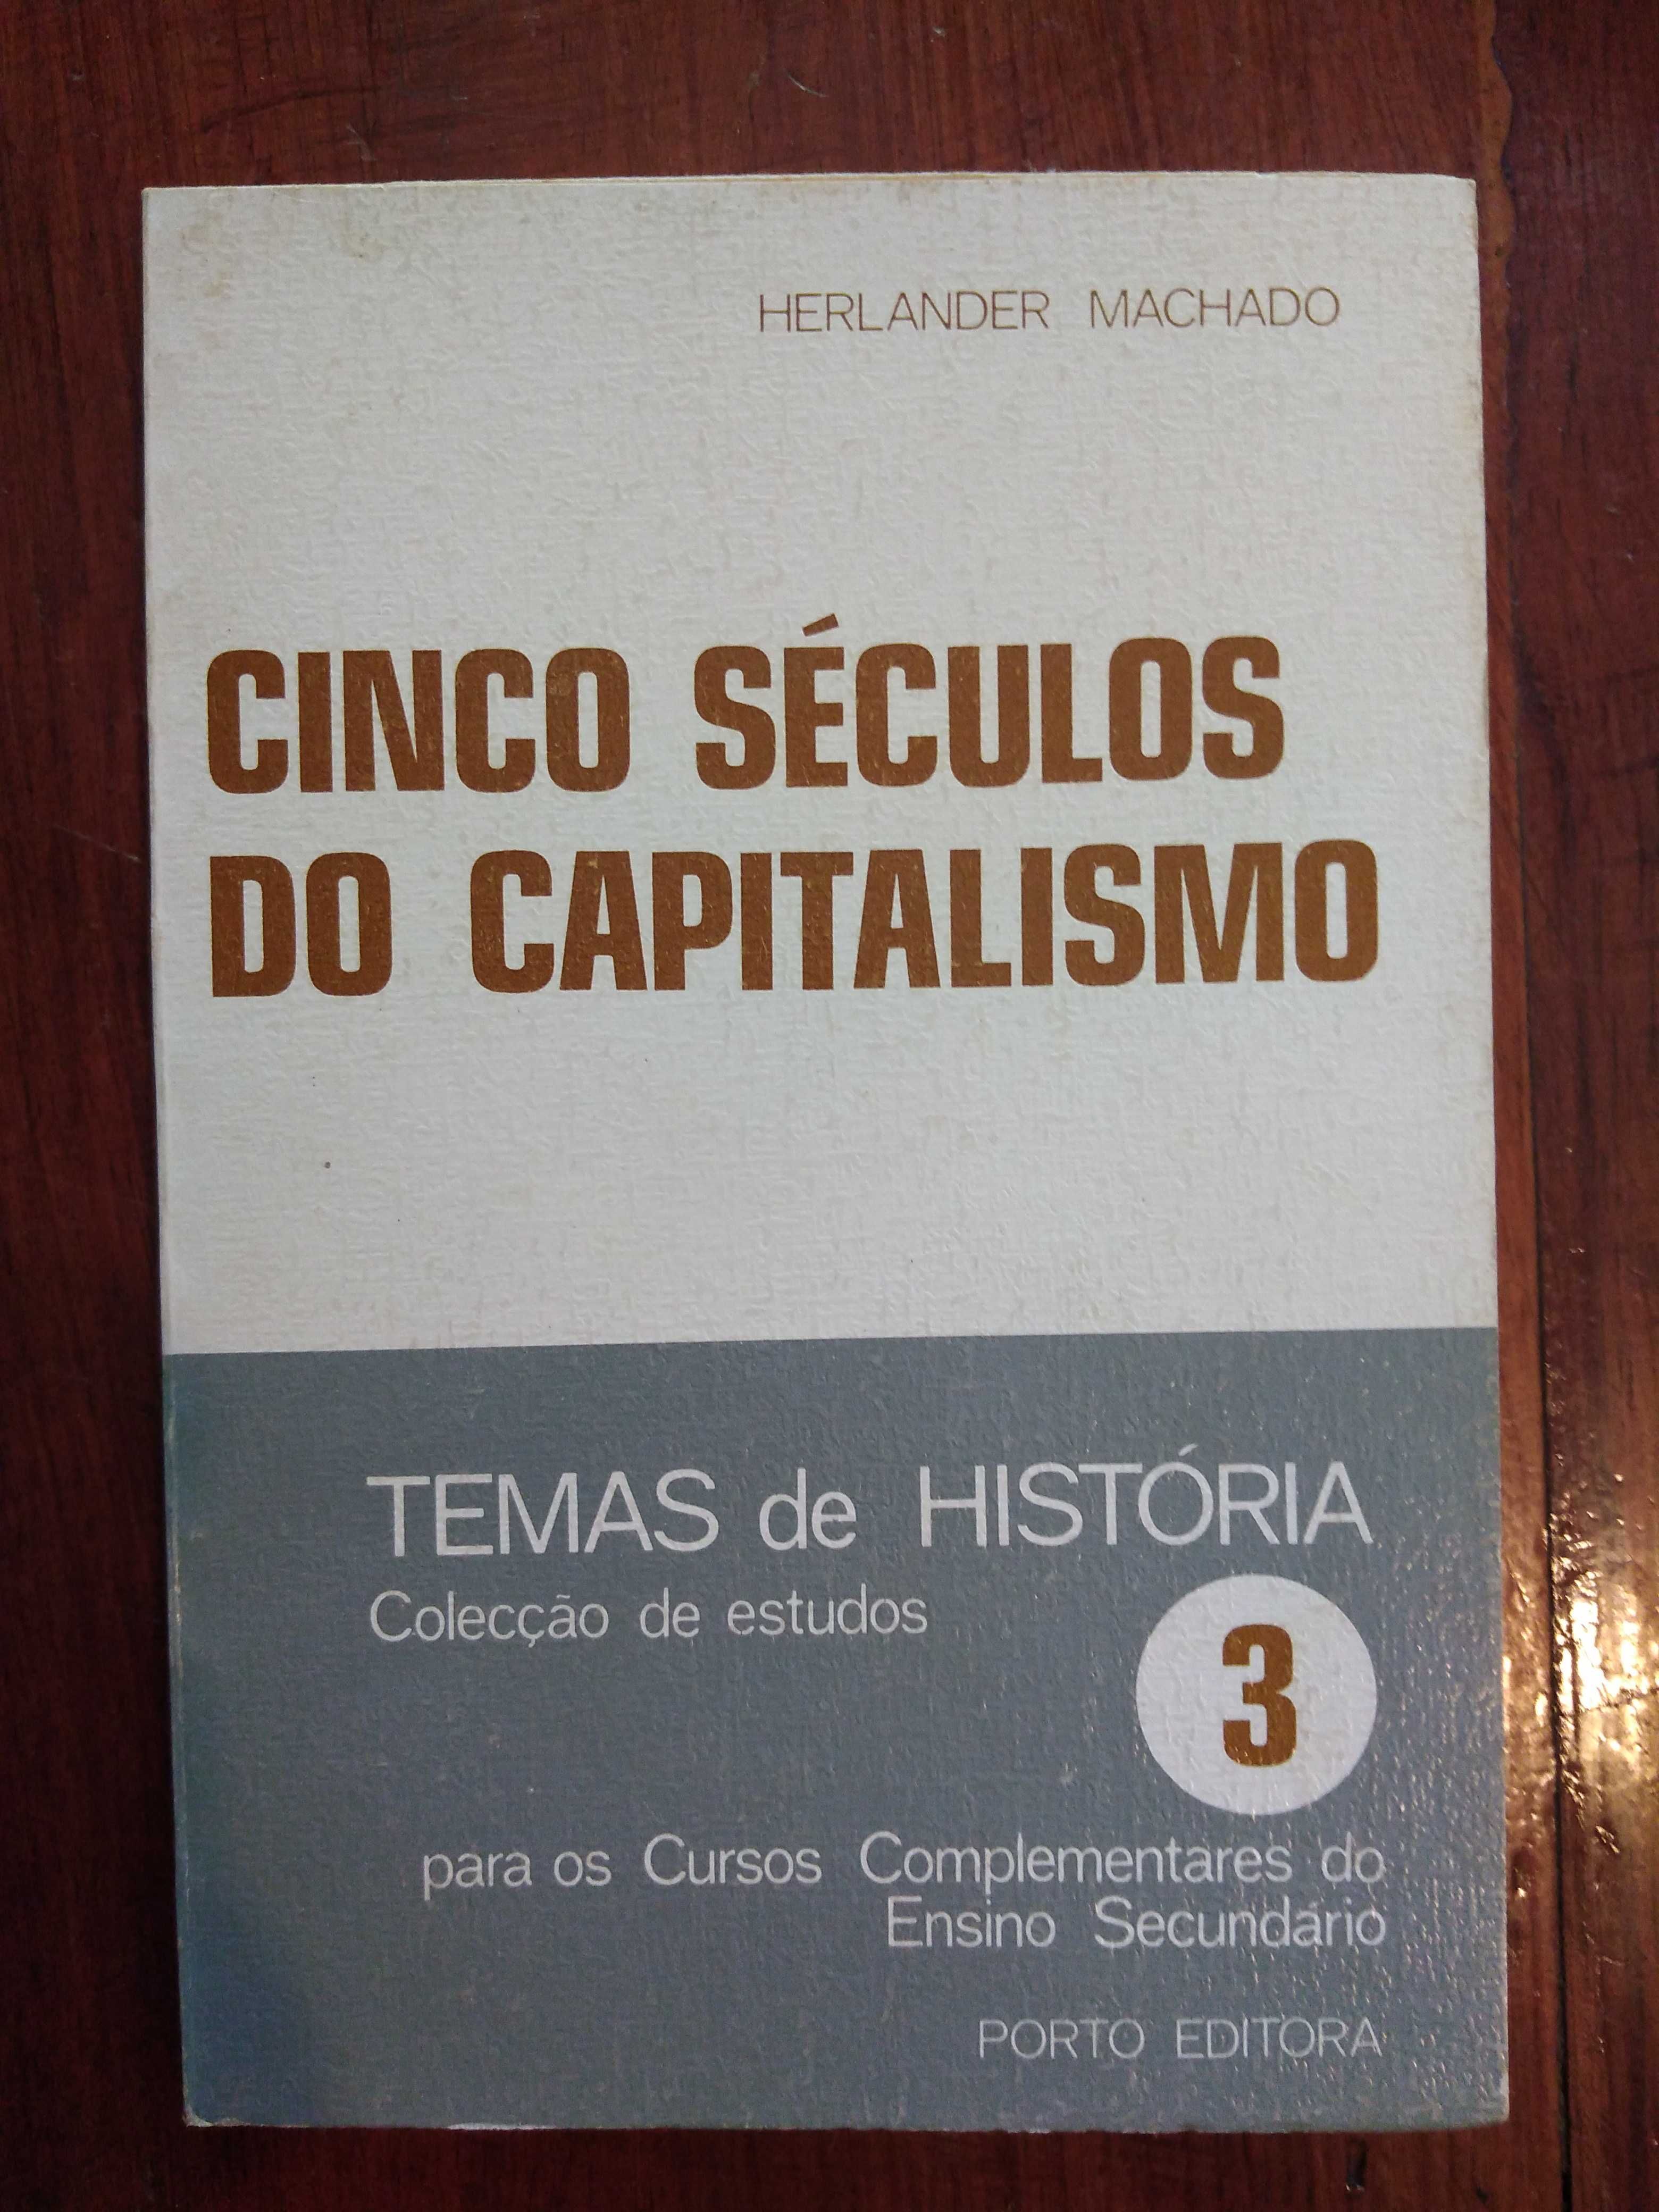 Herlander Machado - Cinco séculos do capitalismo